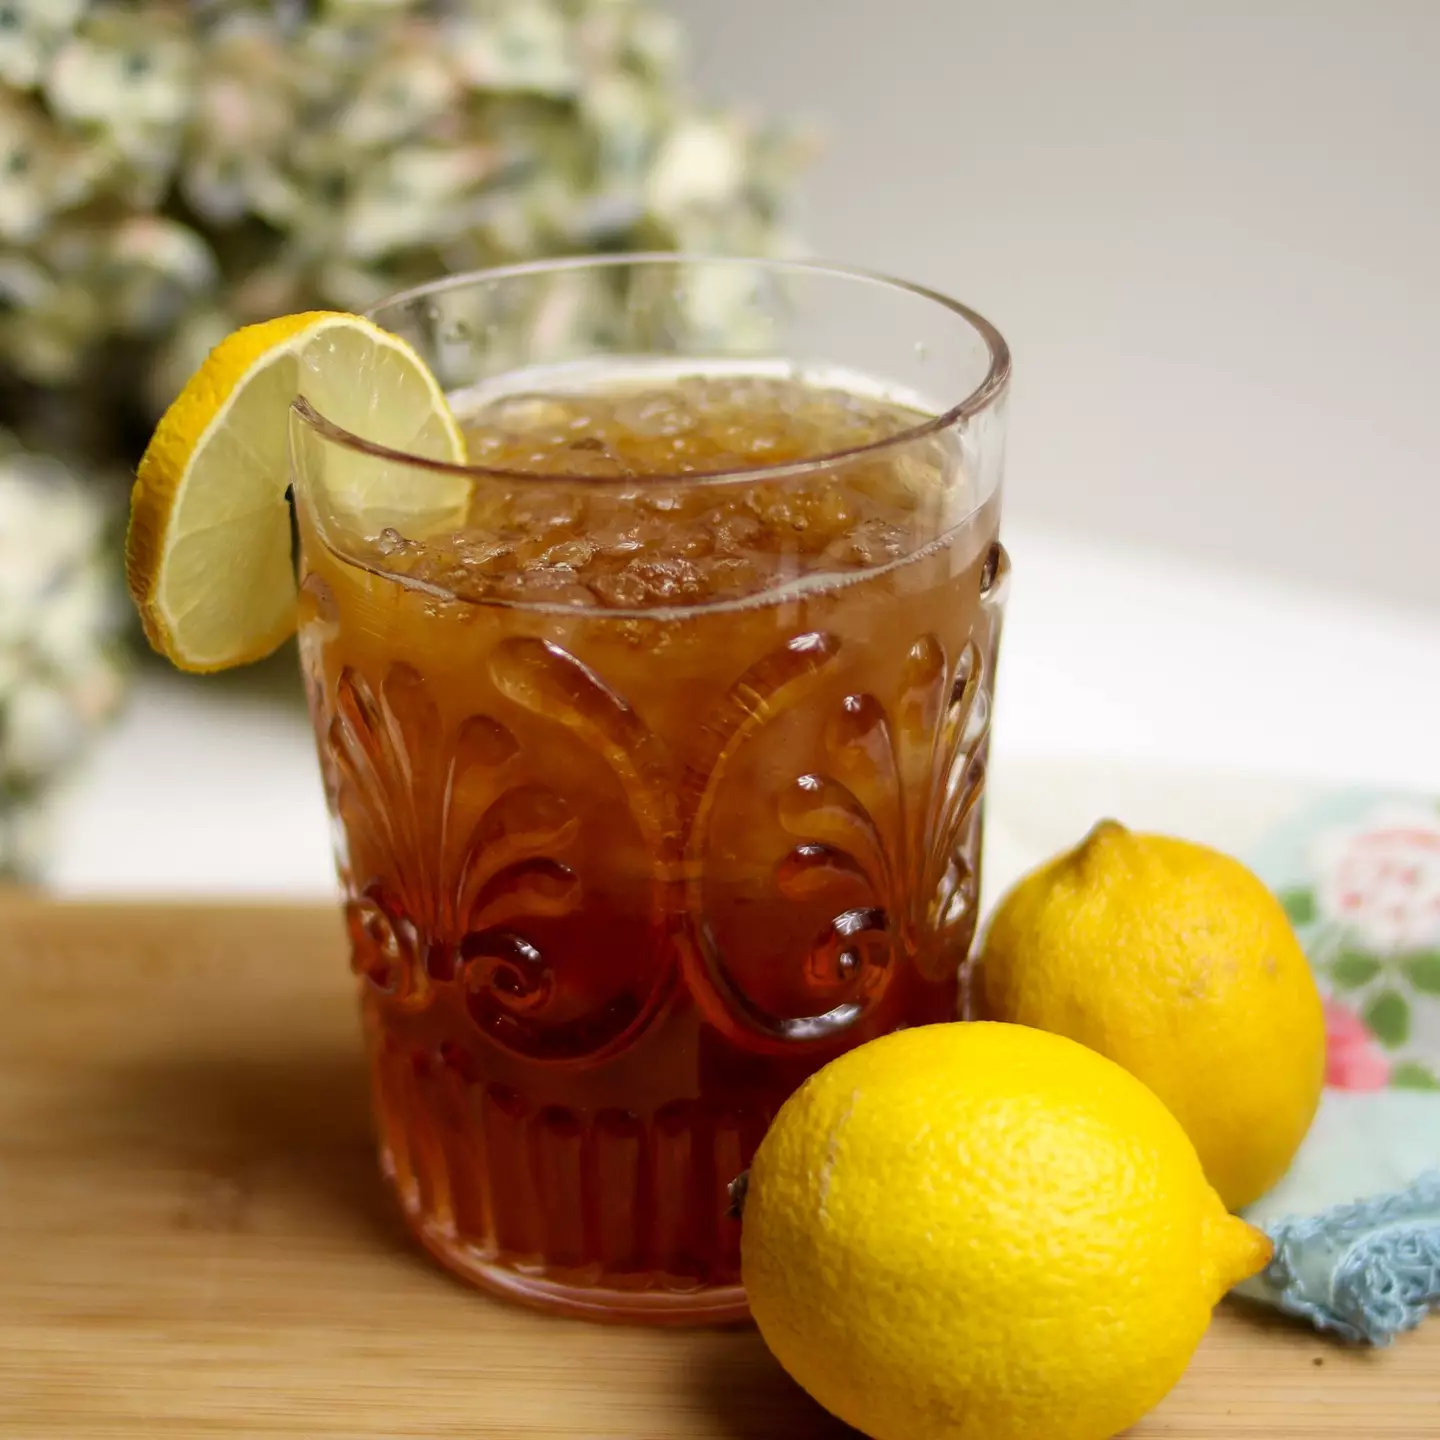 Iced Tea is a popular choice of fake alcohol.